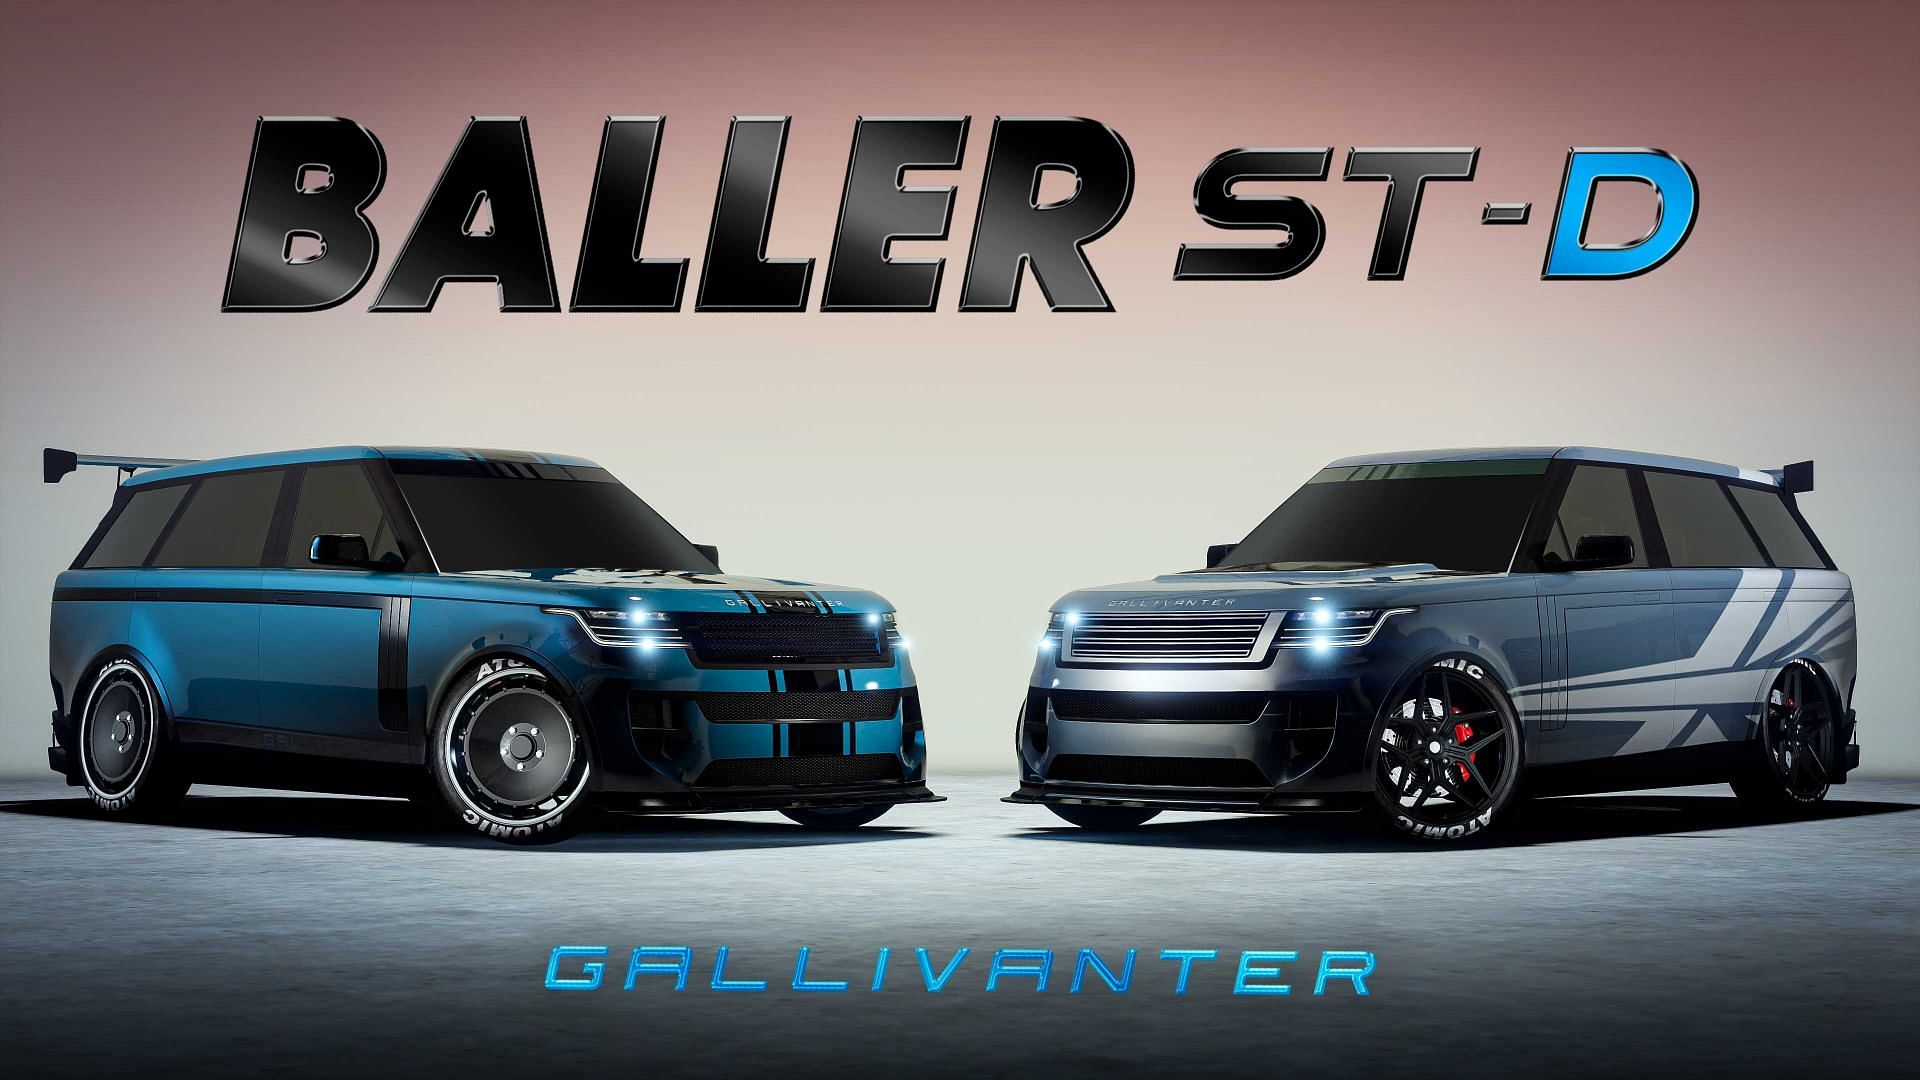 The Gallivanter Baller ST-D has some great features (Image via Rockstar Games)